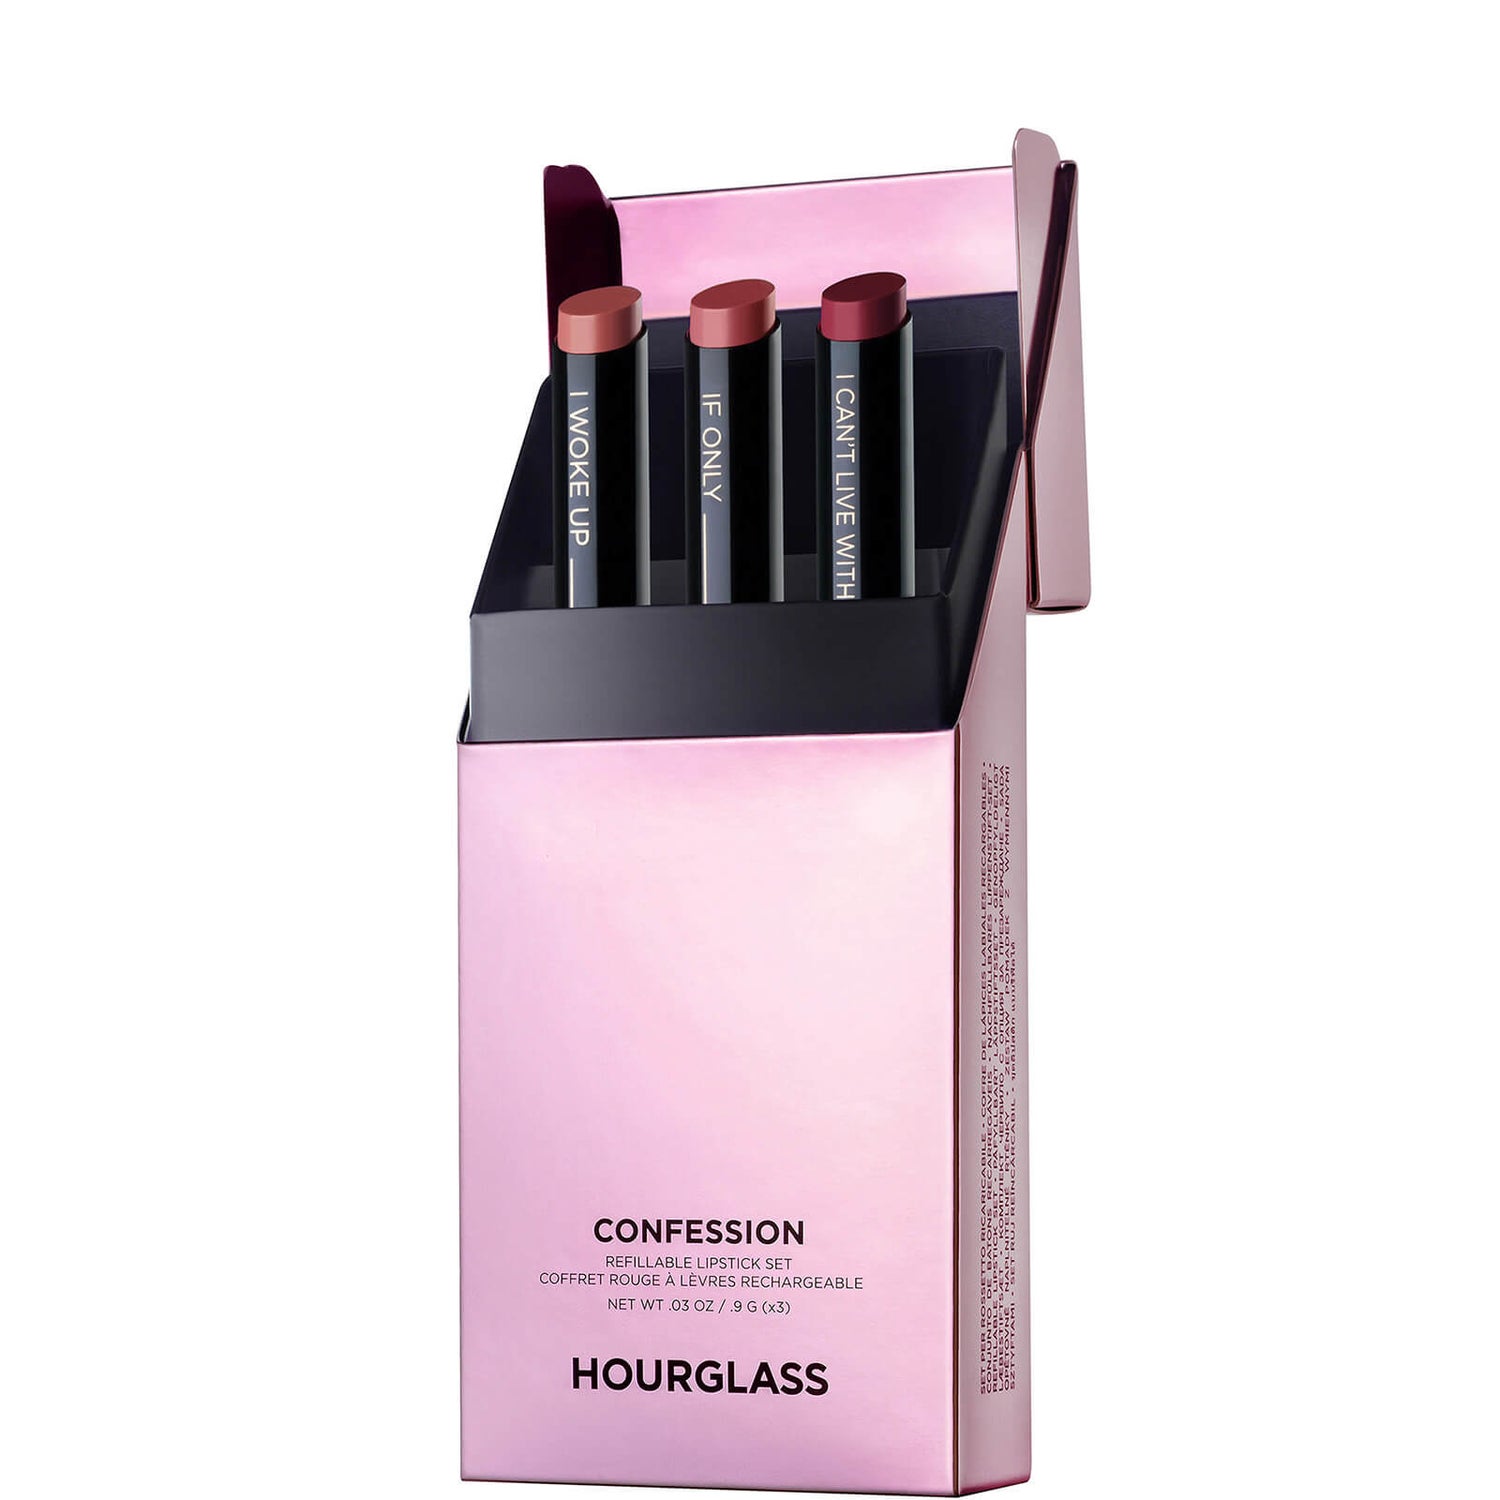 Hourglass Confession Refillable Lipstick Set